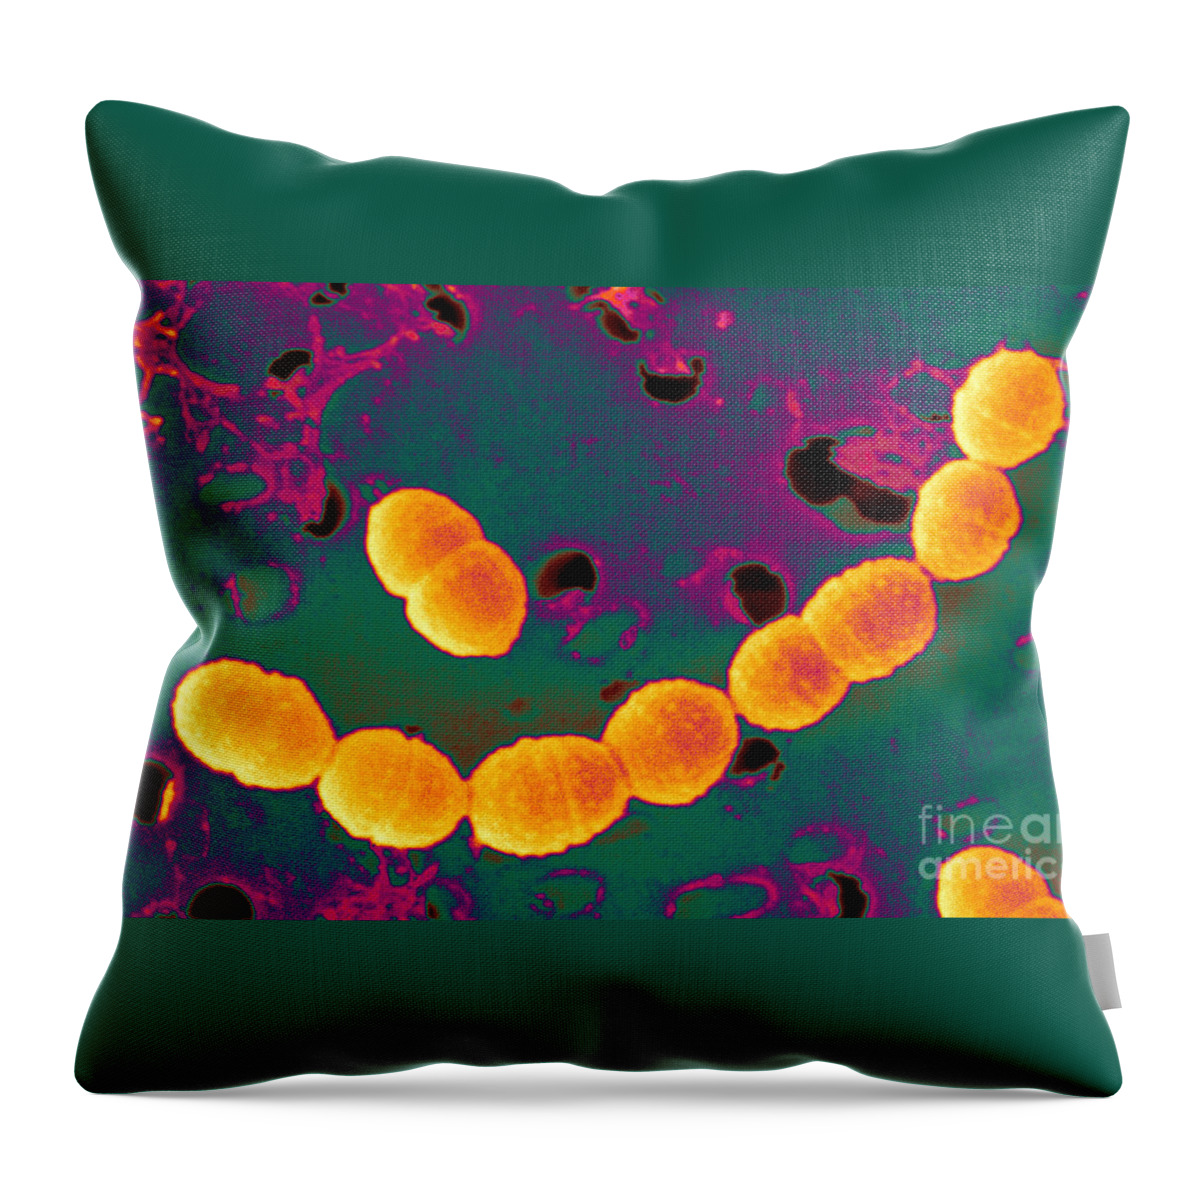 Streptococcus Cremoris Throw Pillow featuring the photograph Bacteria, Streptococcus Cremoris, Sem by Scimat